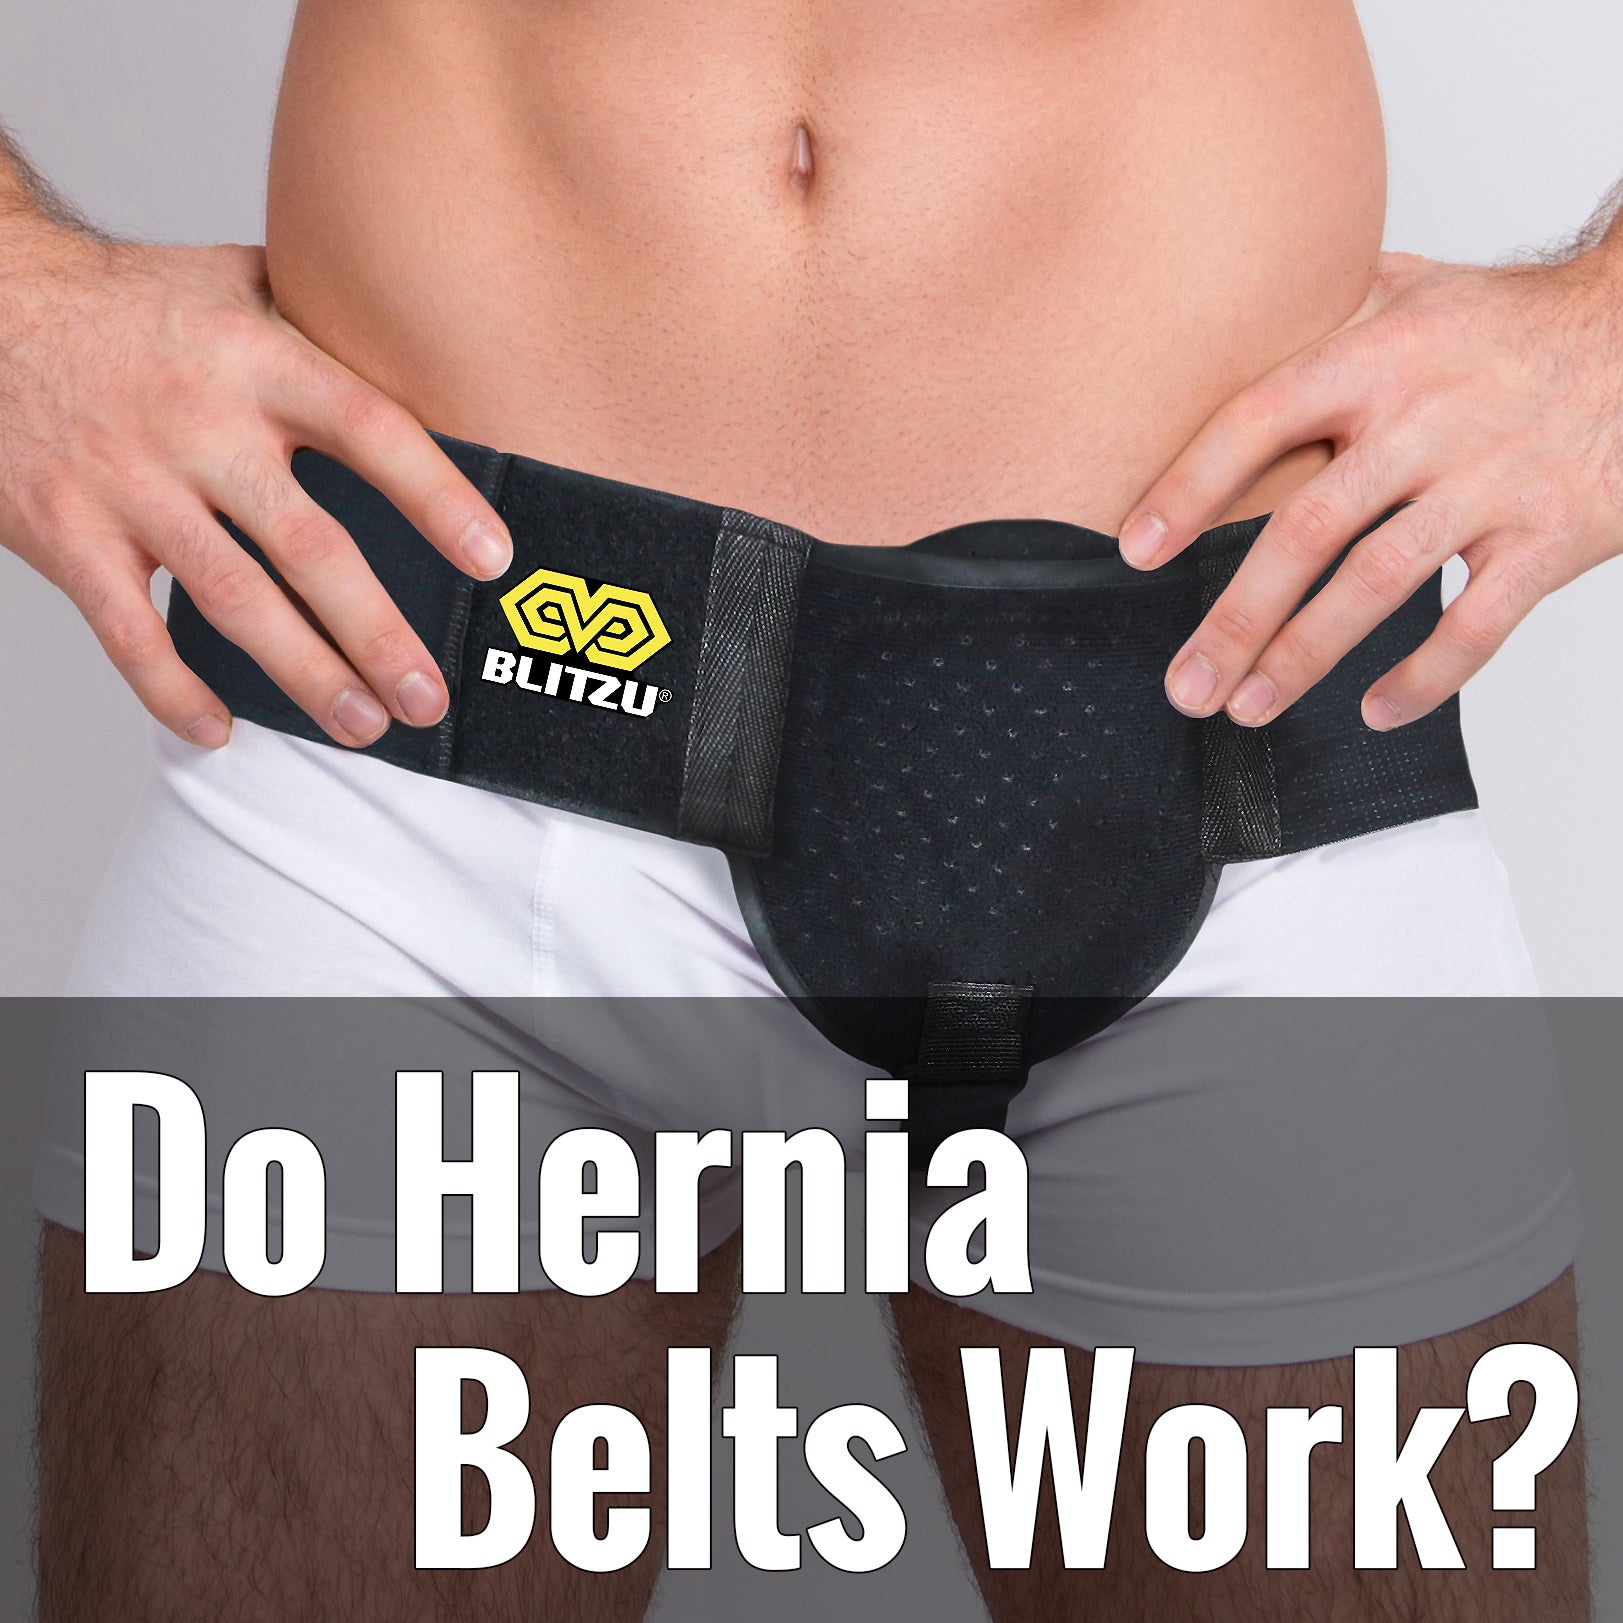 Wearing an Umbilical Hernia Belt : r/Hernia